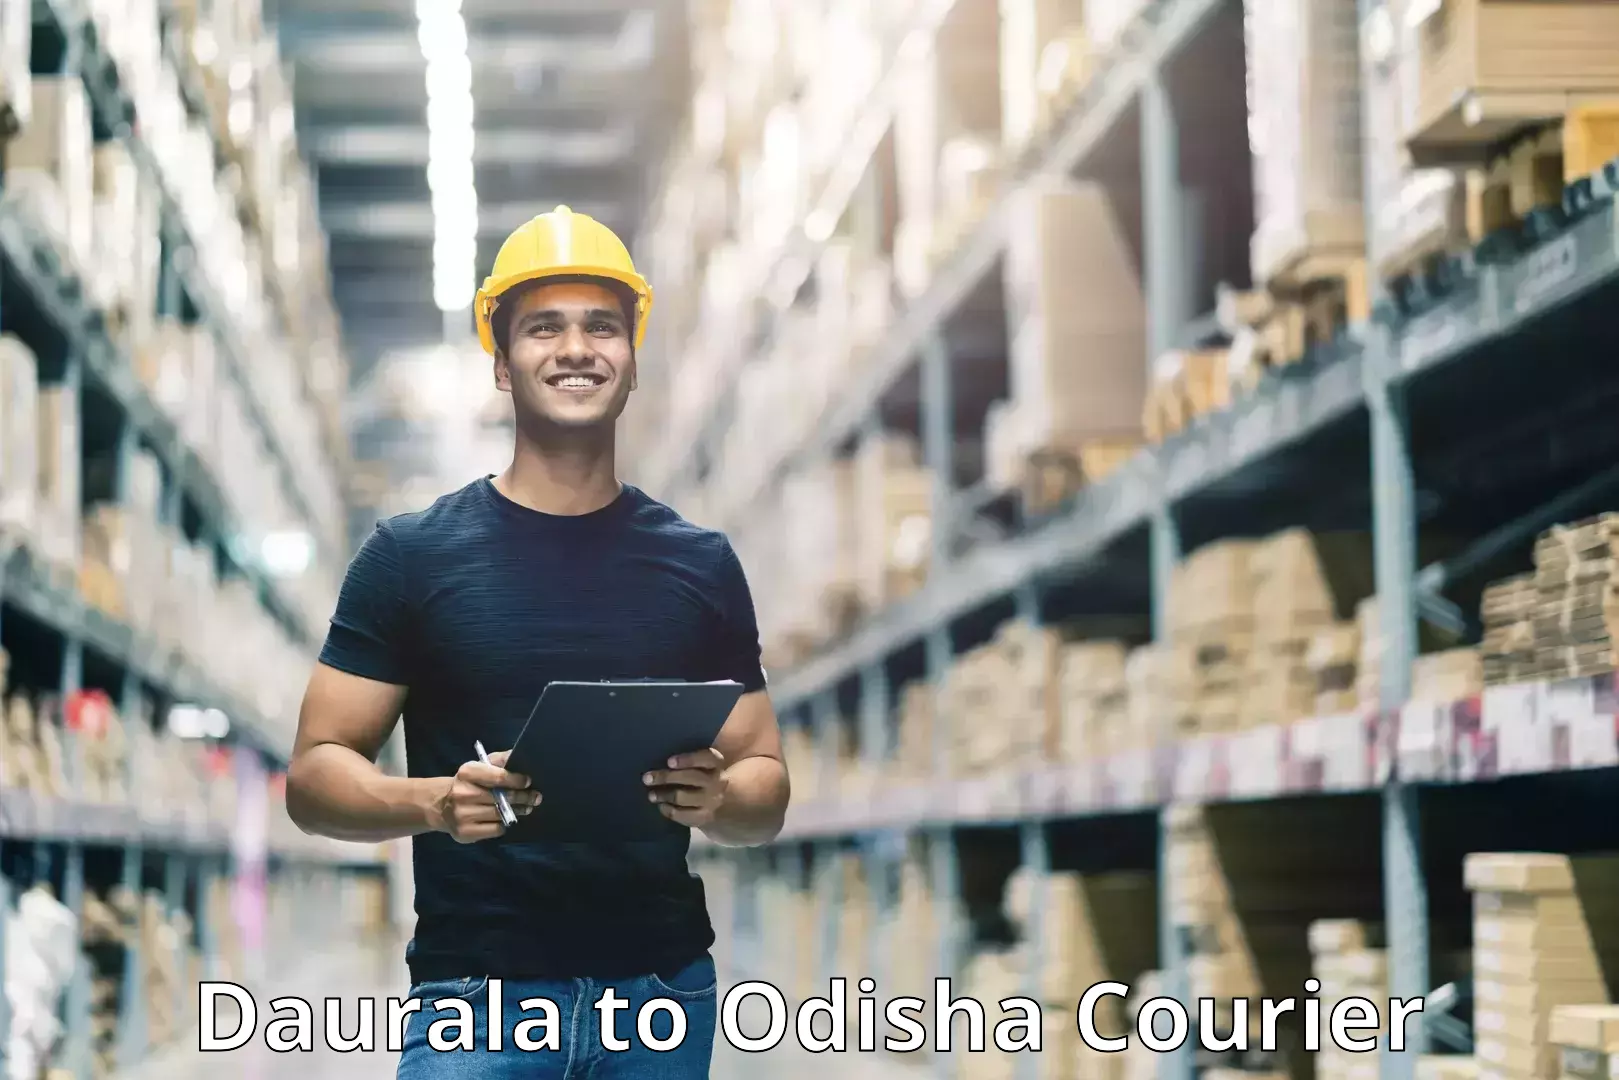 Customer-centric shipping in Daurala to Turanga